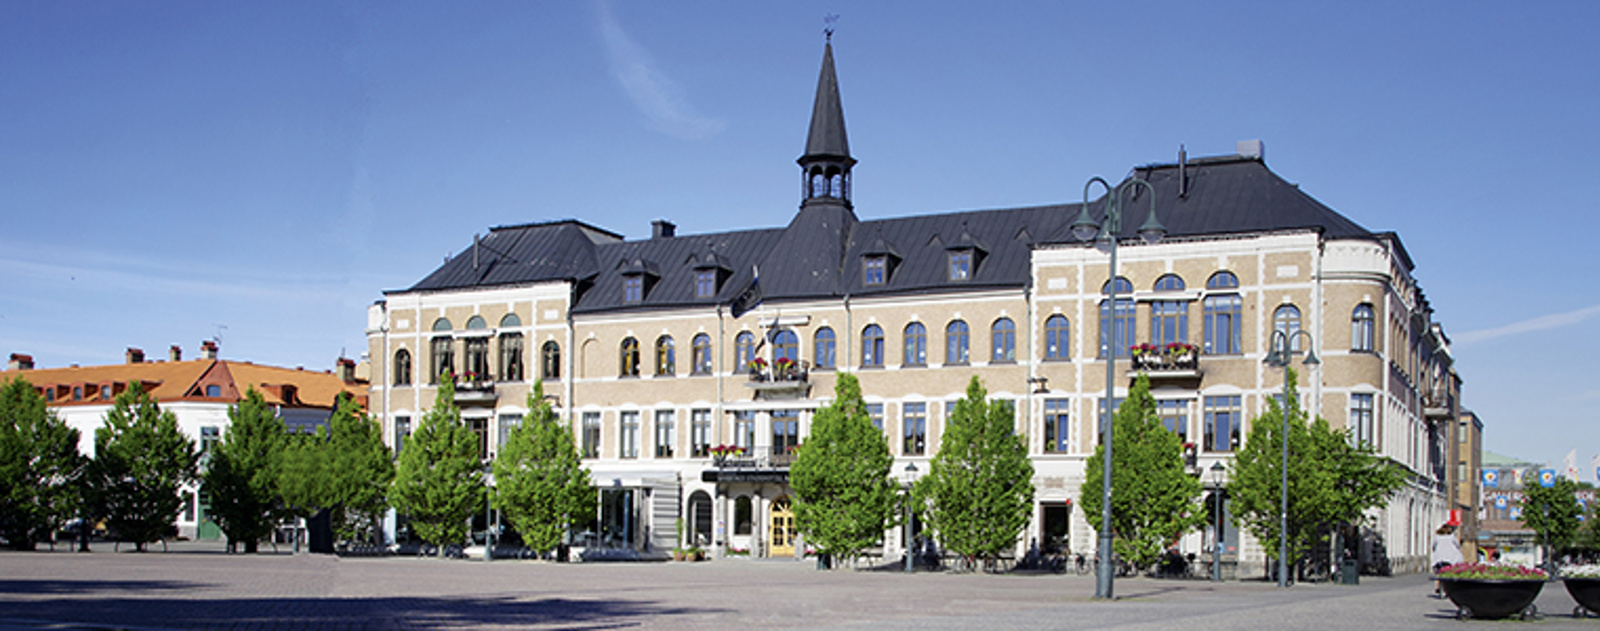 Varbergs Stadshotell